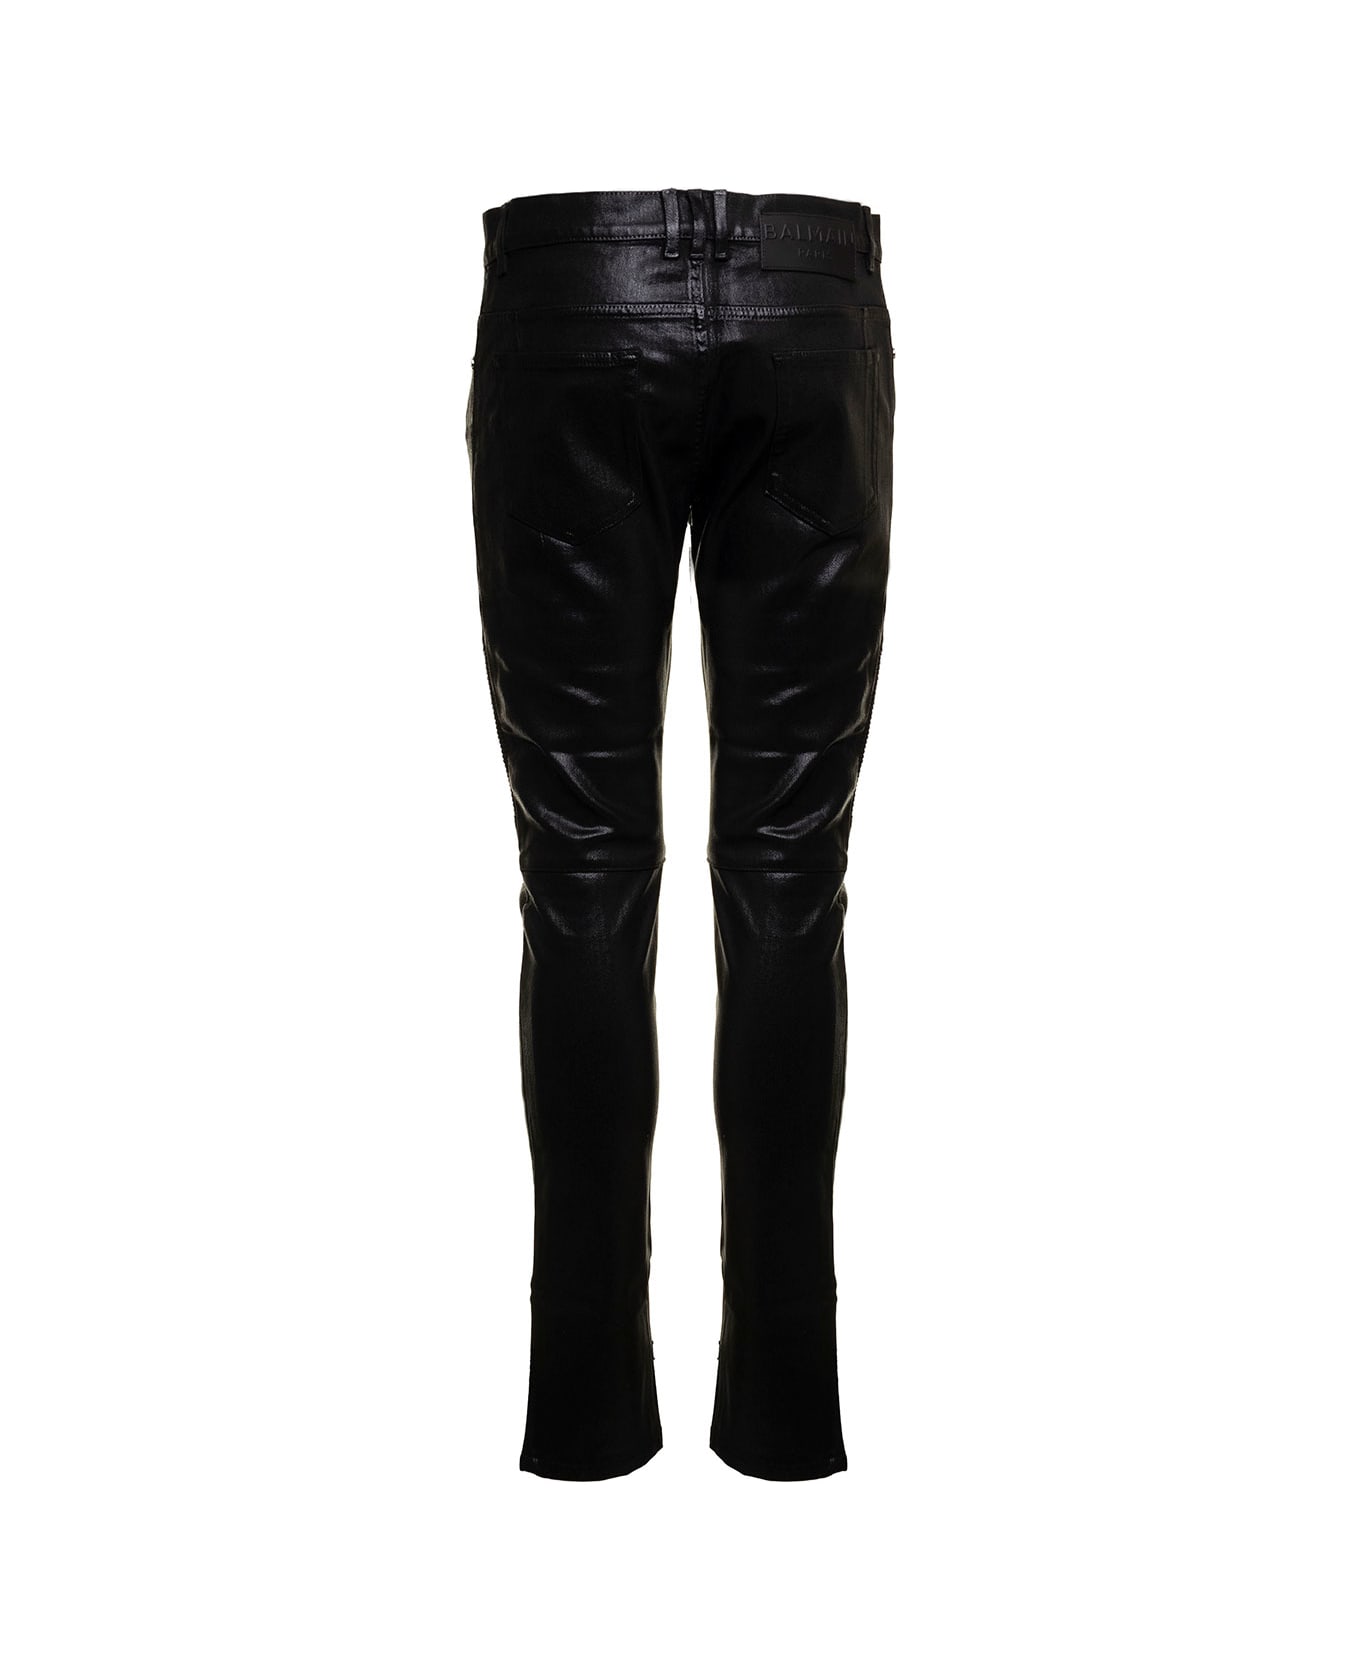 Balmain Man's Slim Fit Black Coated Fabric Jeans - Black